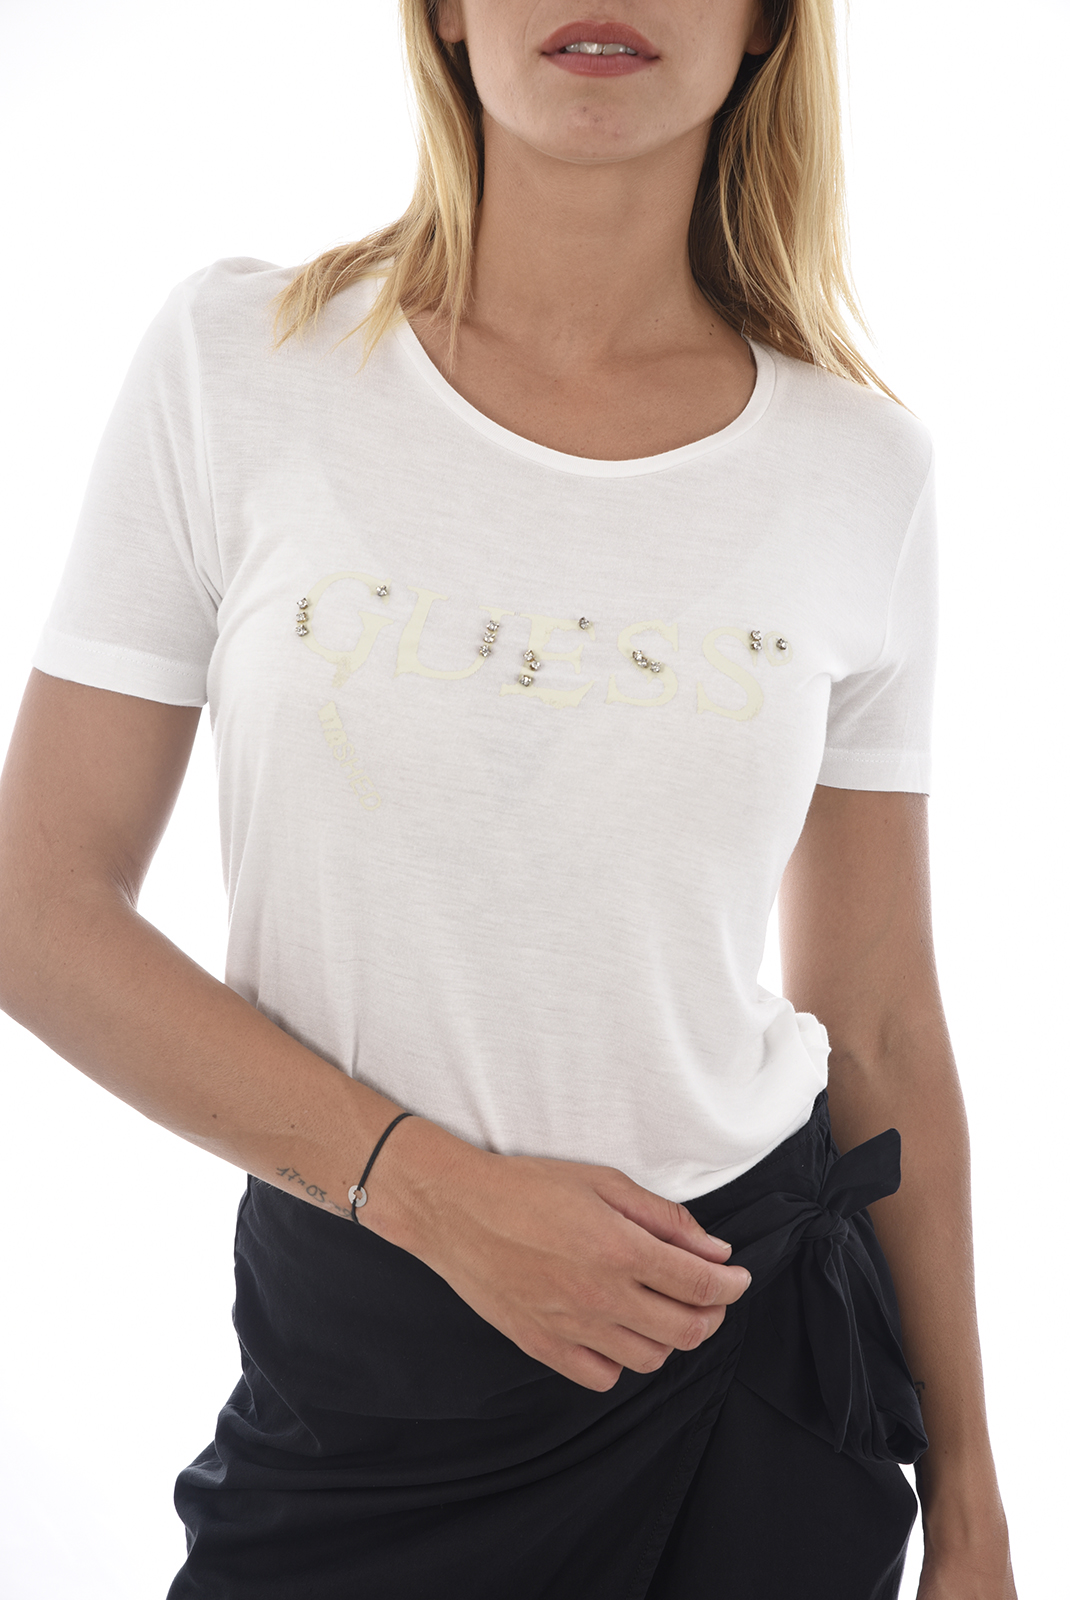 T-Shirt blanc femme - Guess W72i92